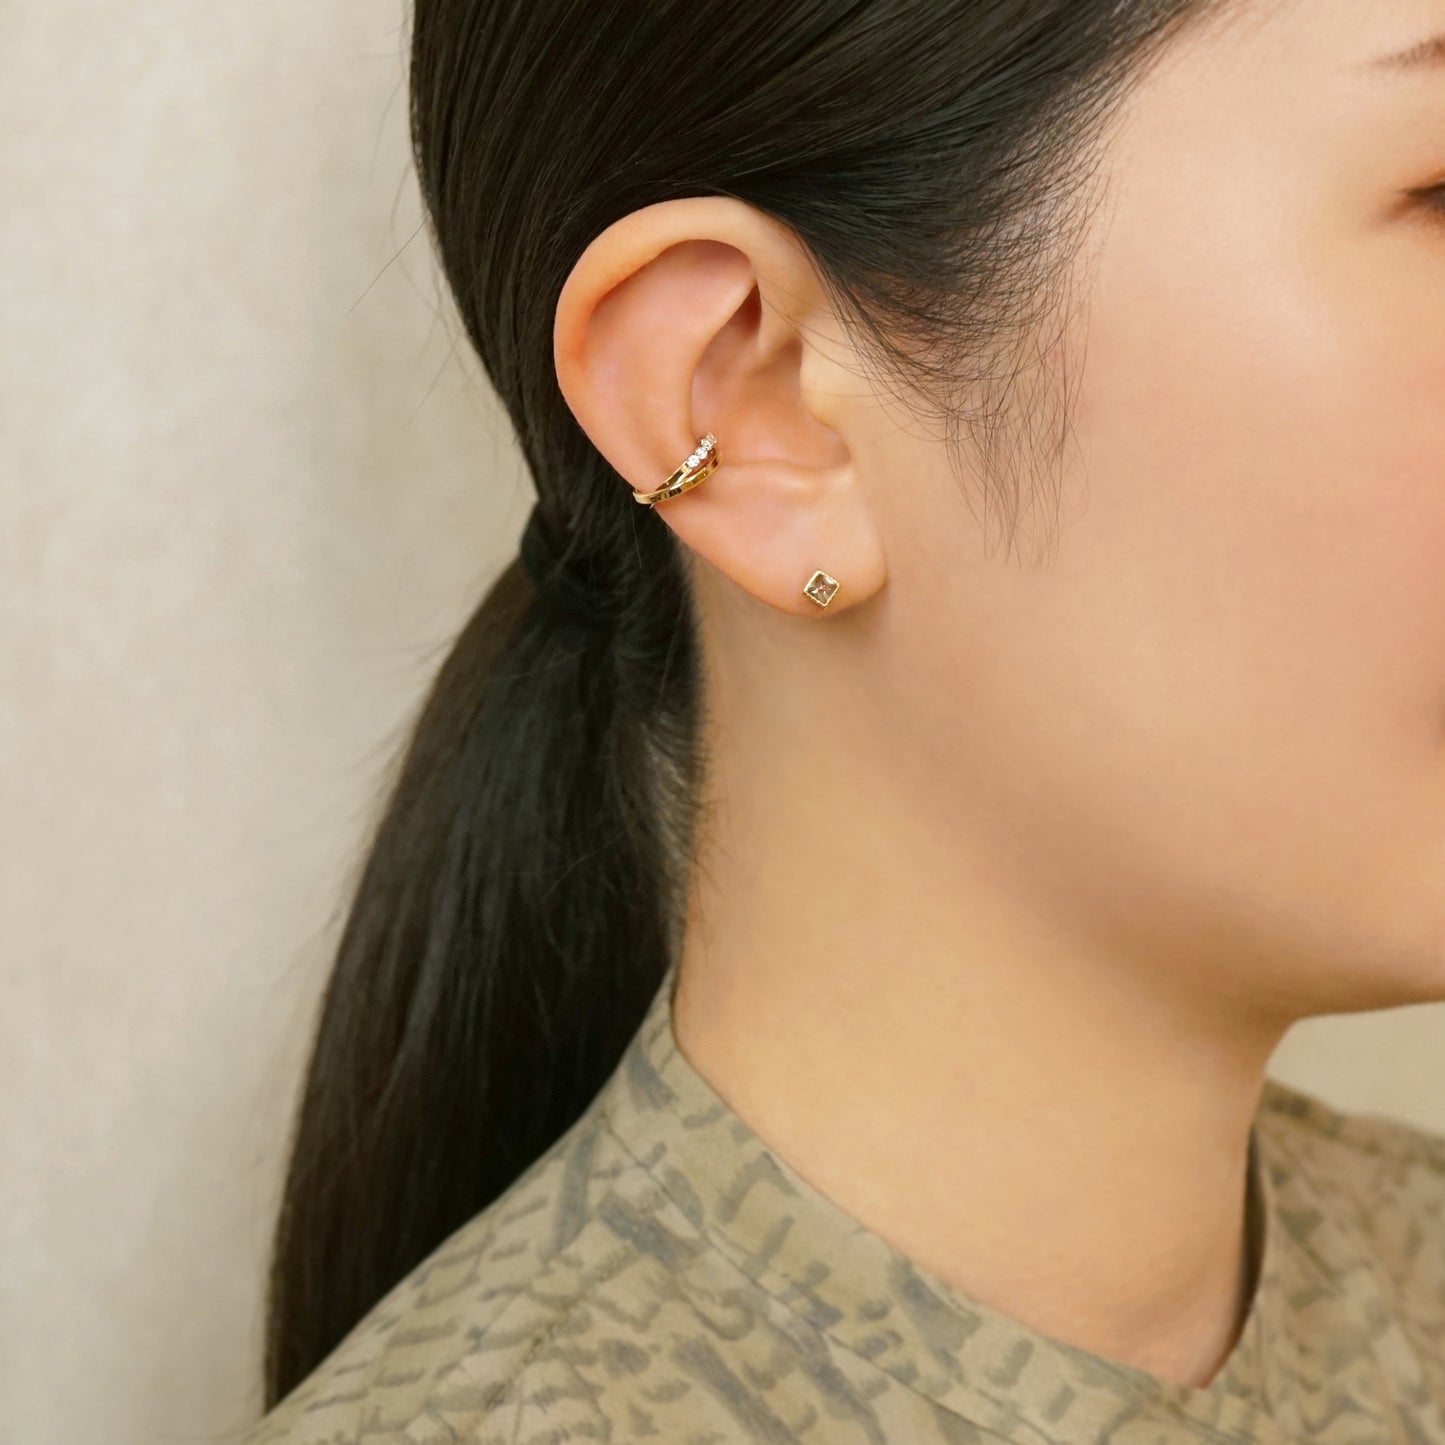 10K Yellow Gold Glittering Ear Cuff - Model Image